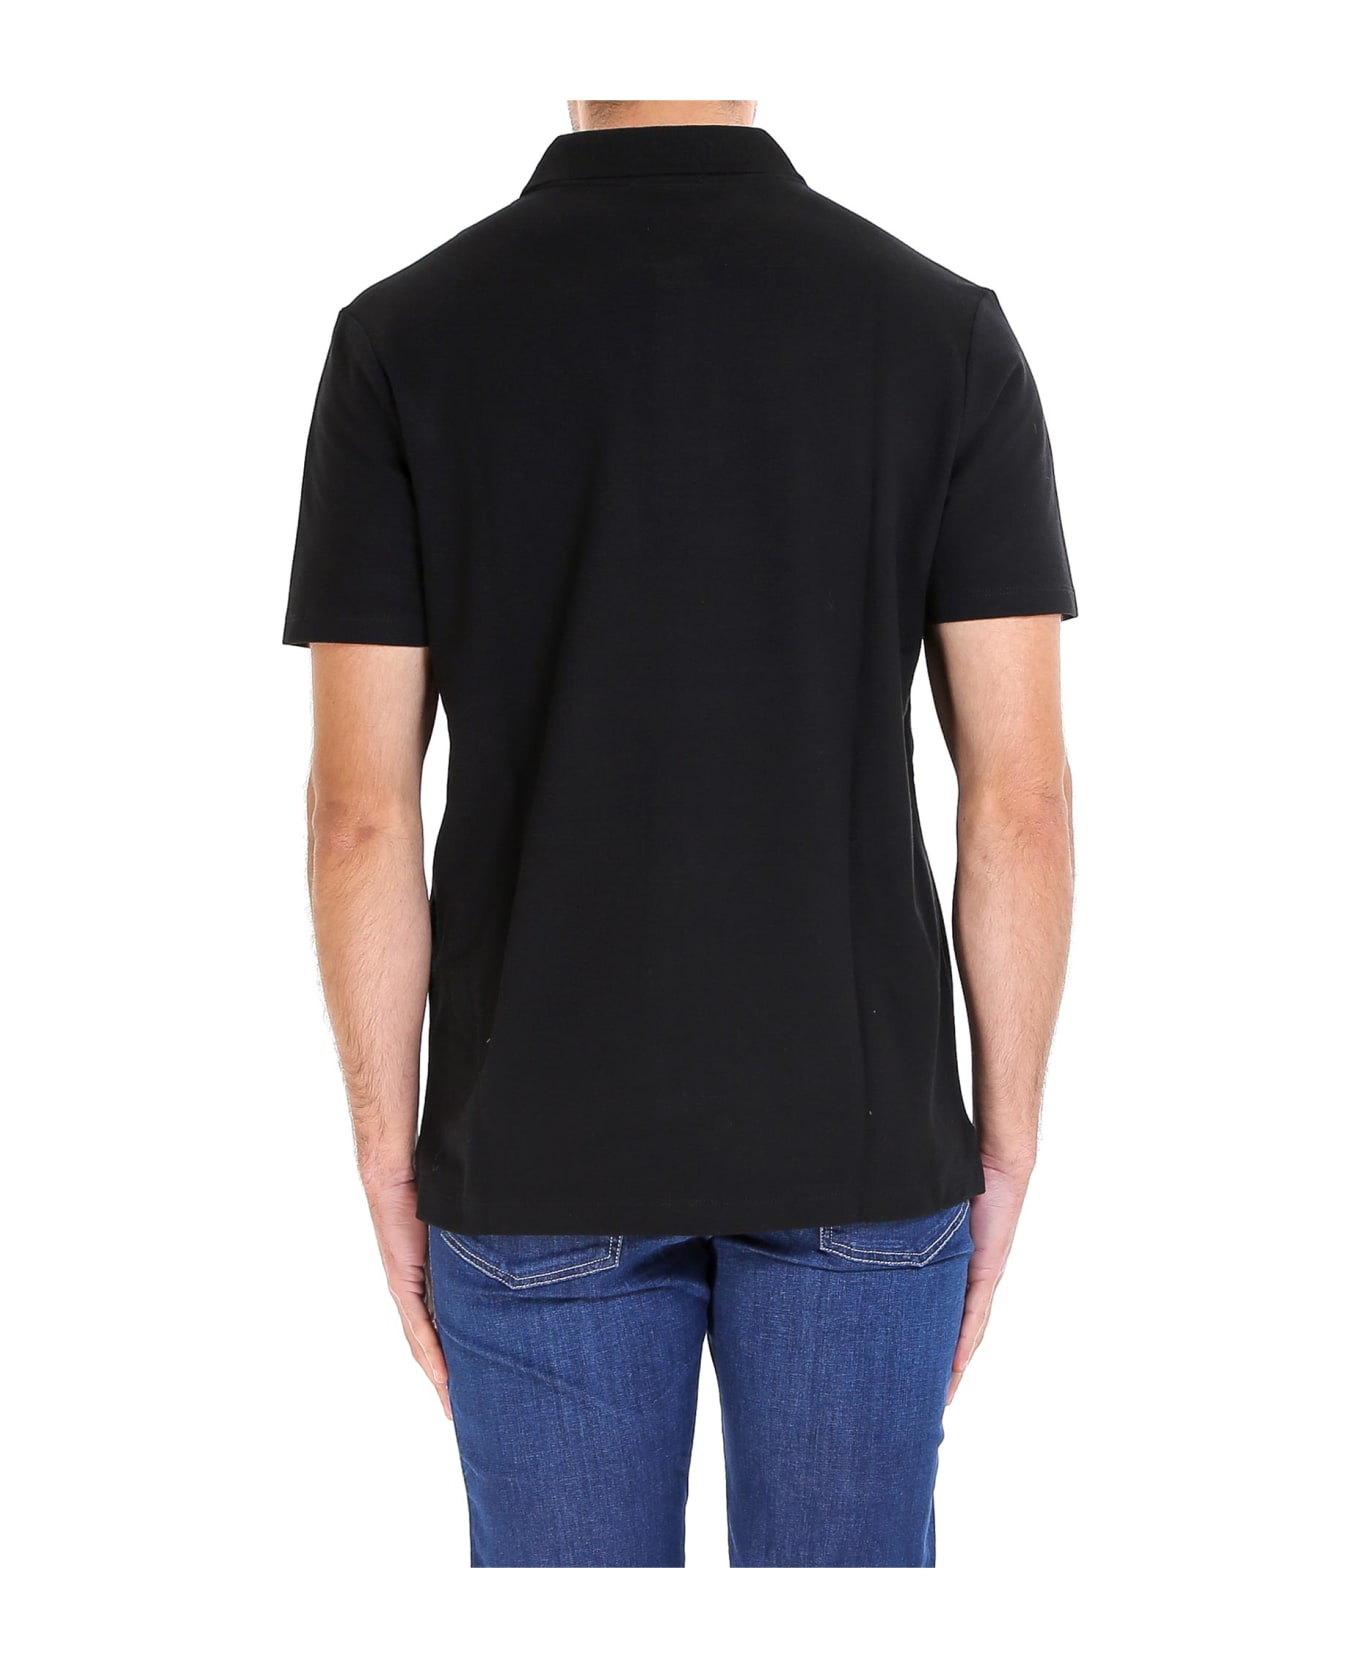 Paul&Shark Polo Shirt - BLACK ポロシャツ